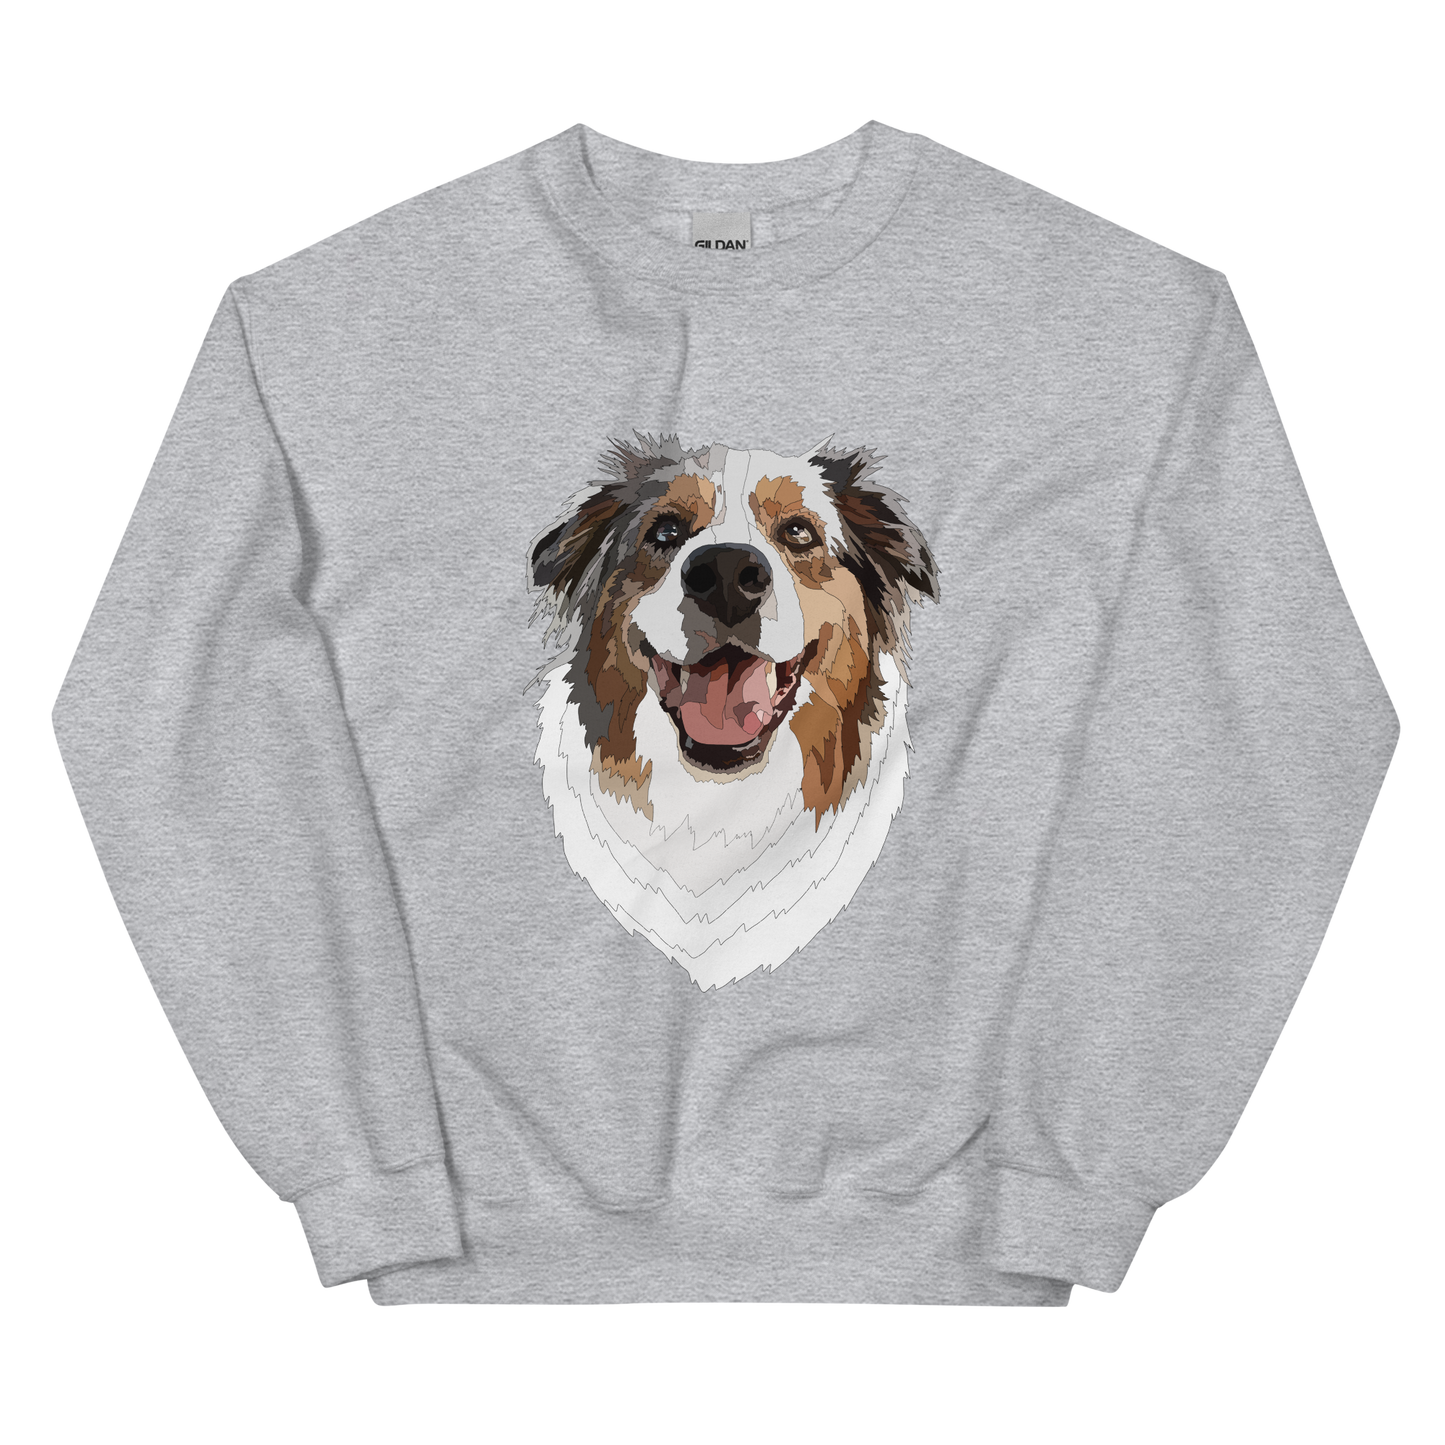 Add-On : Sweatshirt